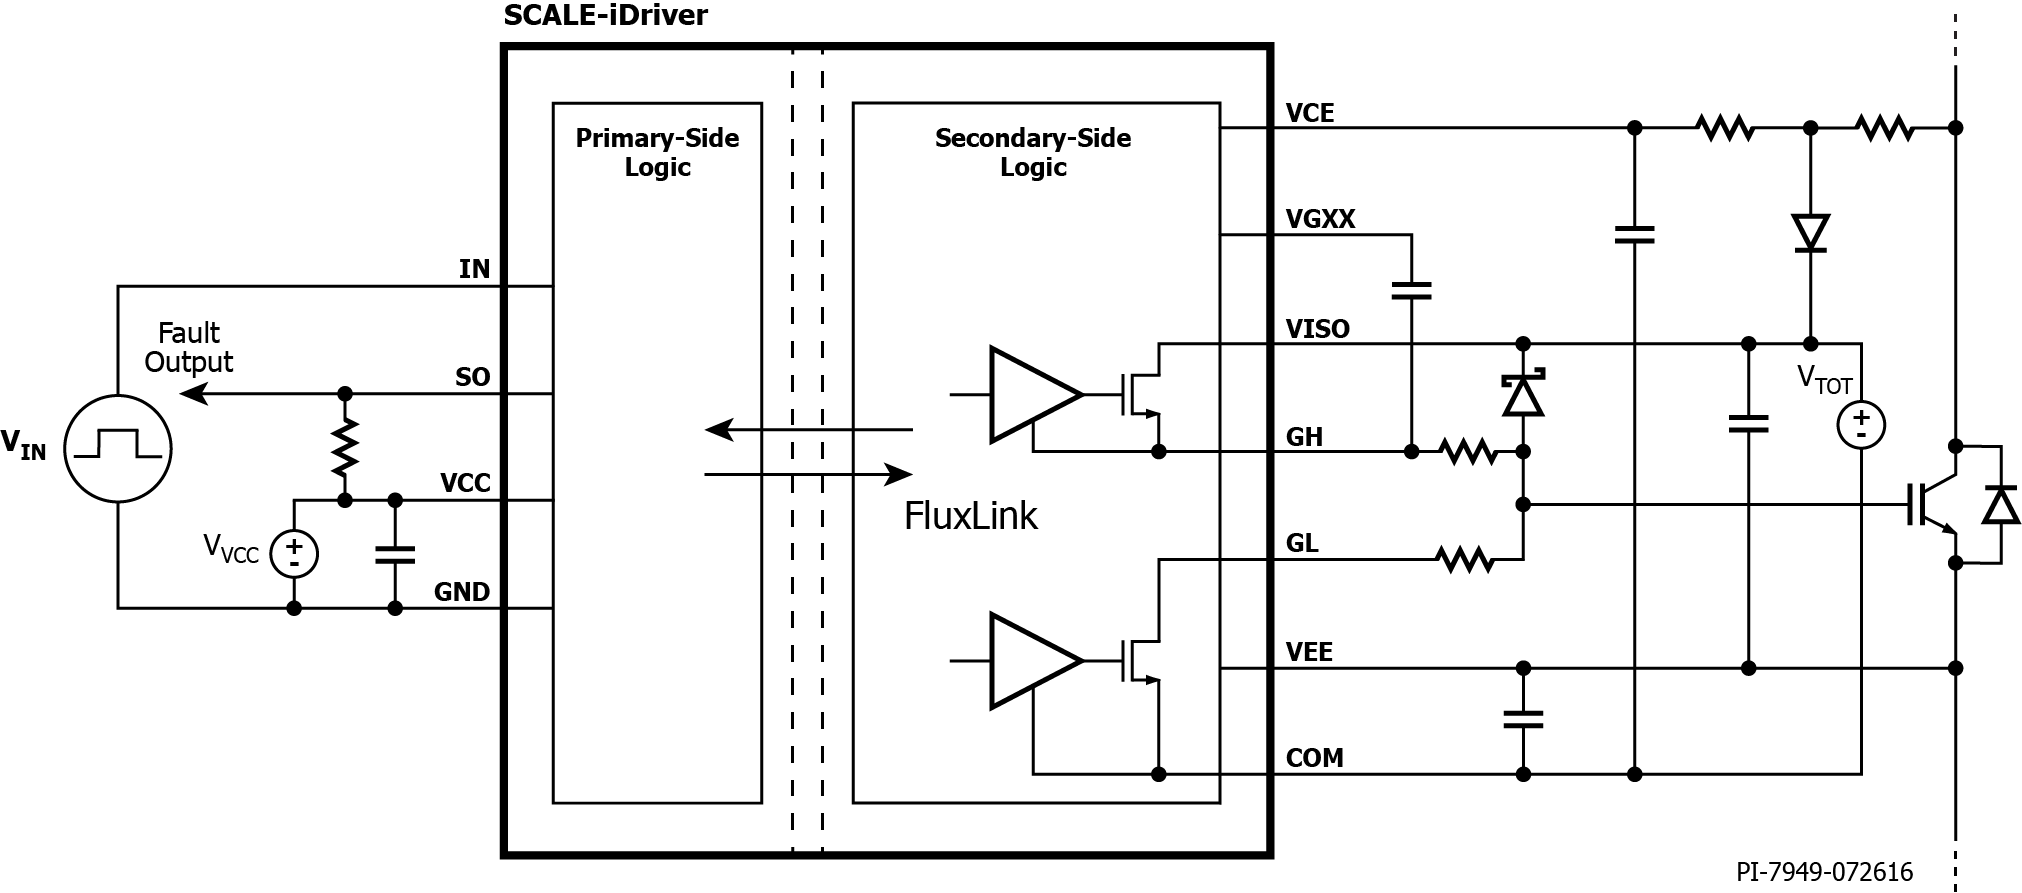 https://igbt-driver.power.com/sites/default/files/images/schematics/scale_idriver_schematic.png#